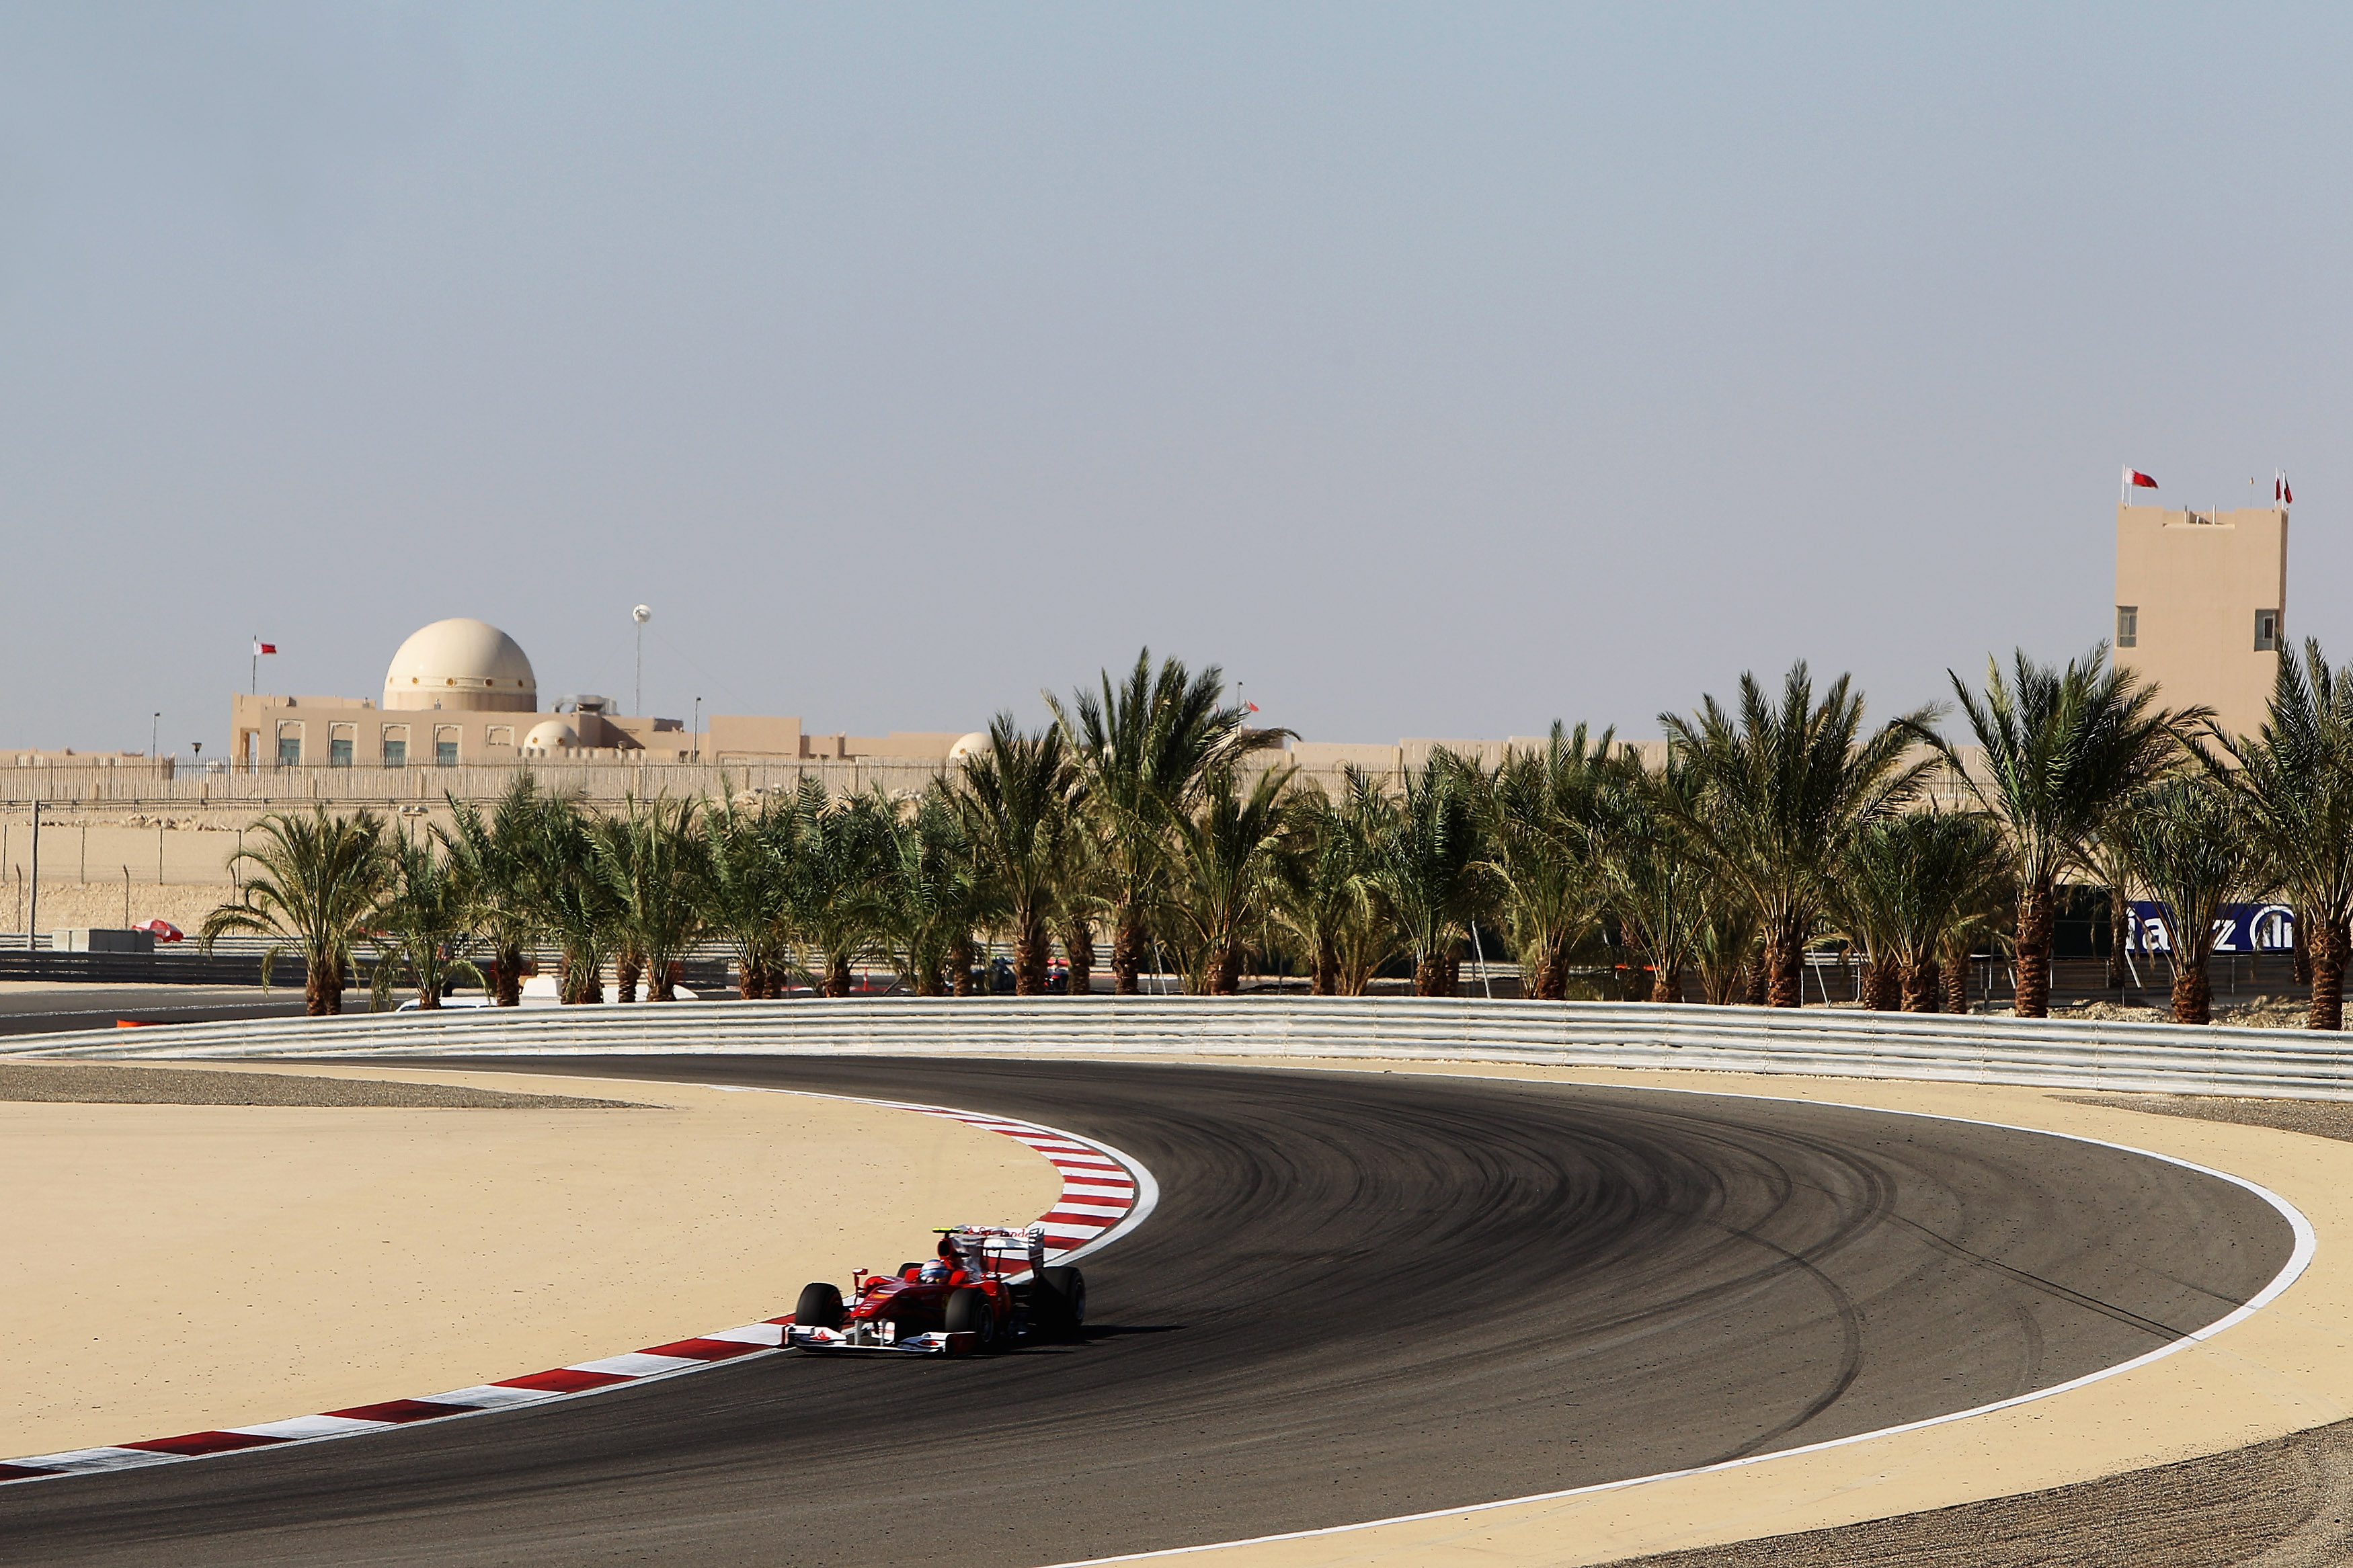 SAKIR, BAHRAIN - MARCH 14:  Fernando Alonso of Spain and Ferrari drives during the Bahrain Formula One Grand Prix at the Bahrain International Circuit on March 14, 2010 in Sakir, Bahrain.  (Photo by Mark Thompson/Getty Images)